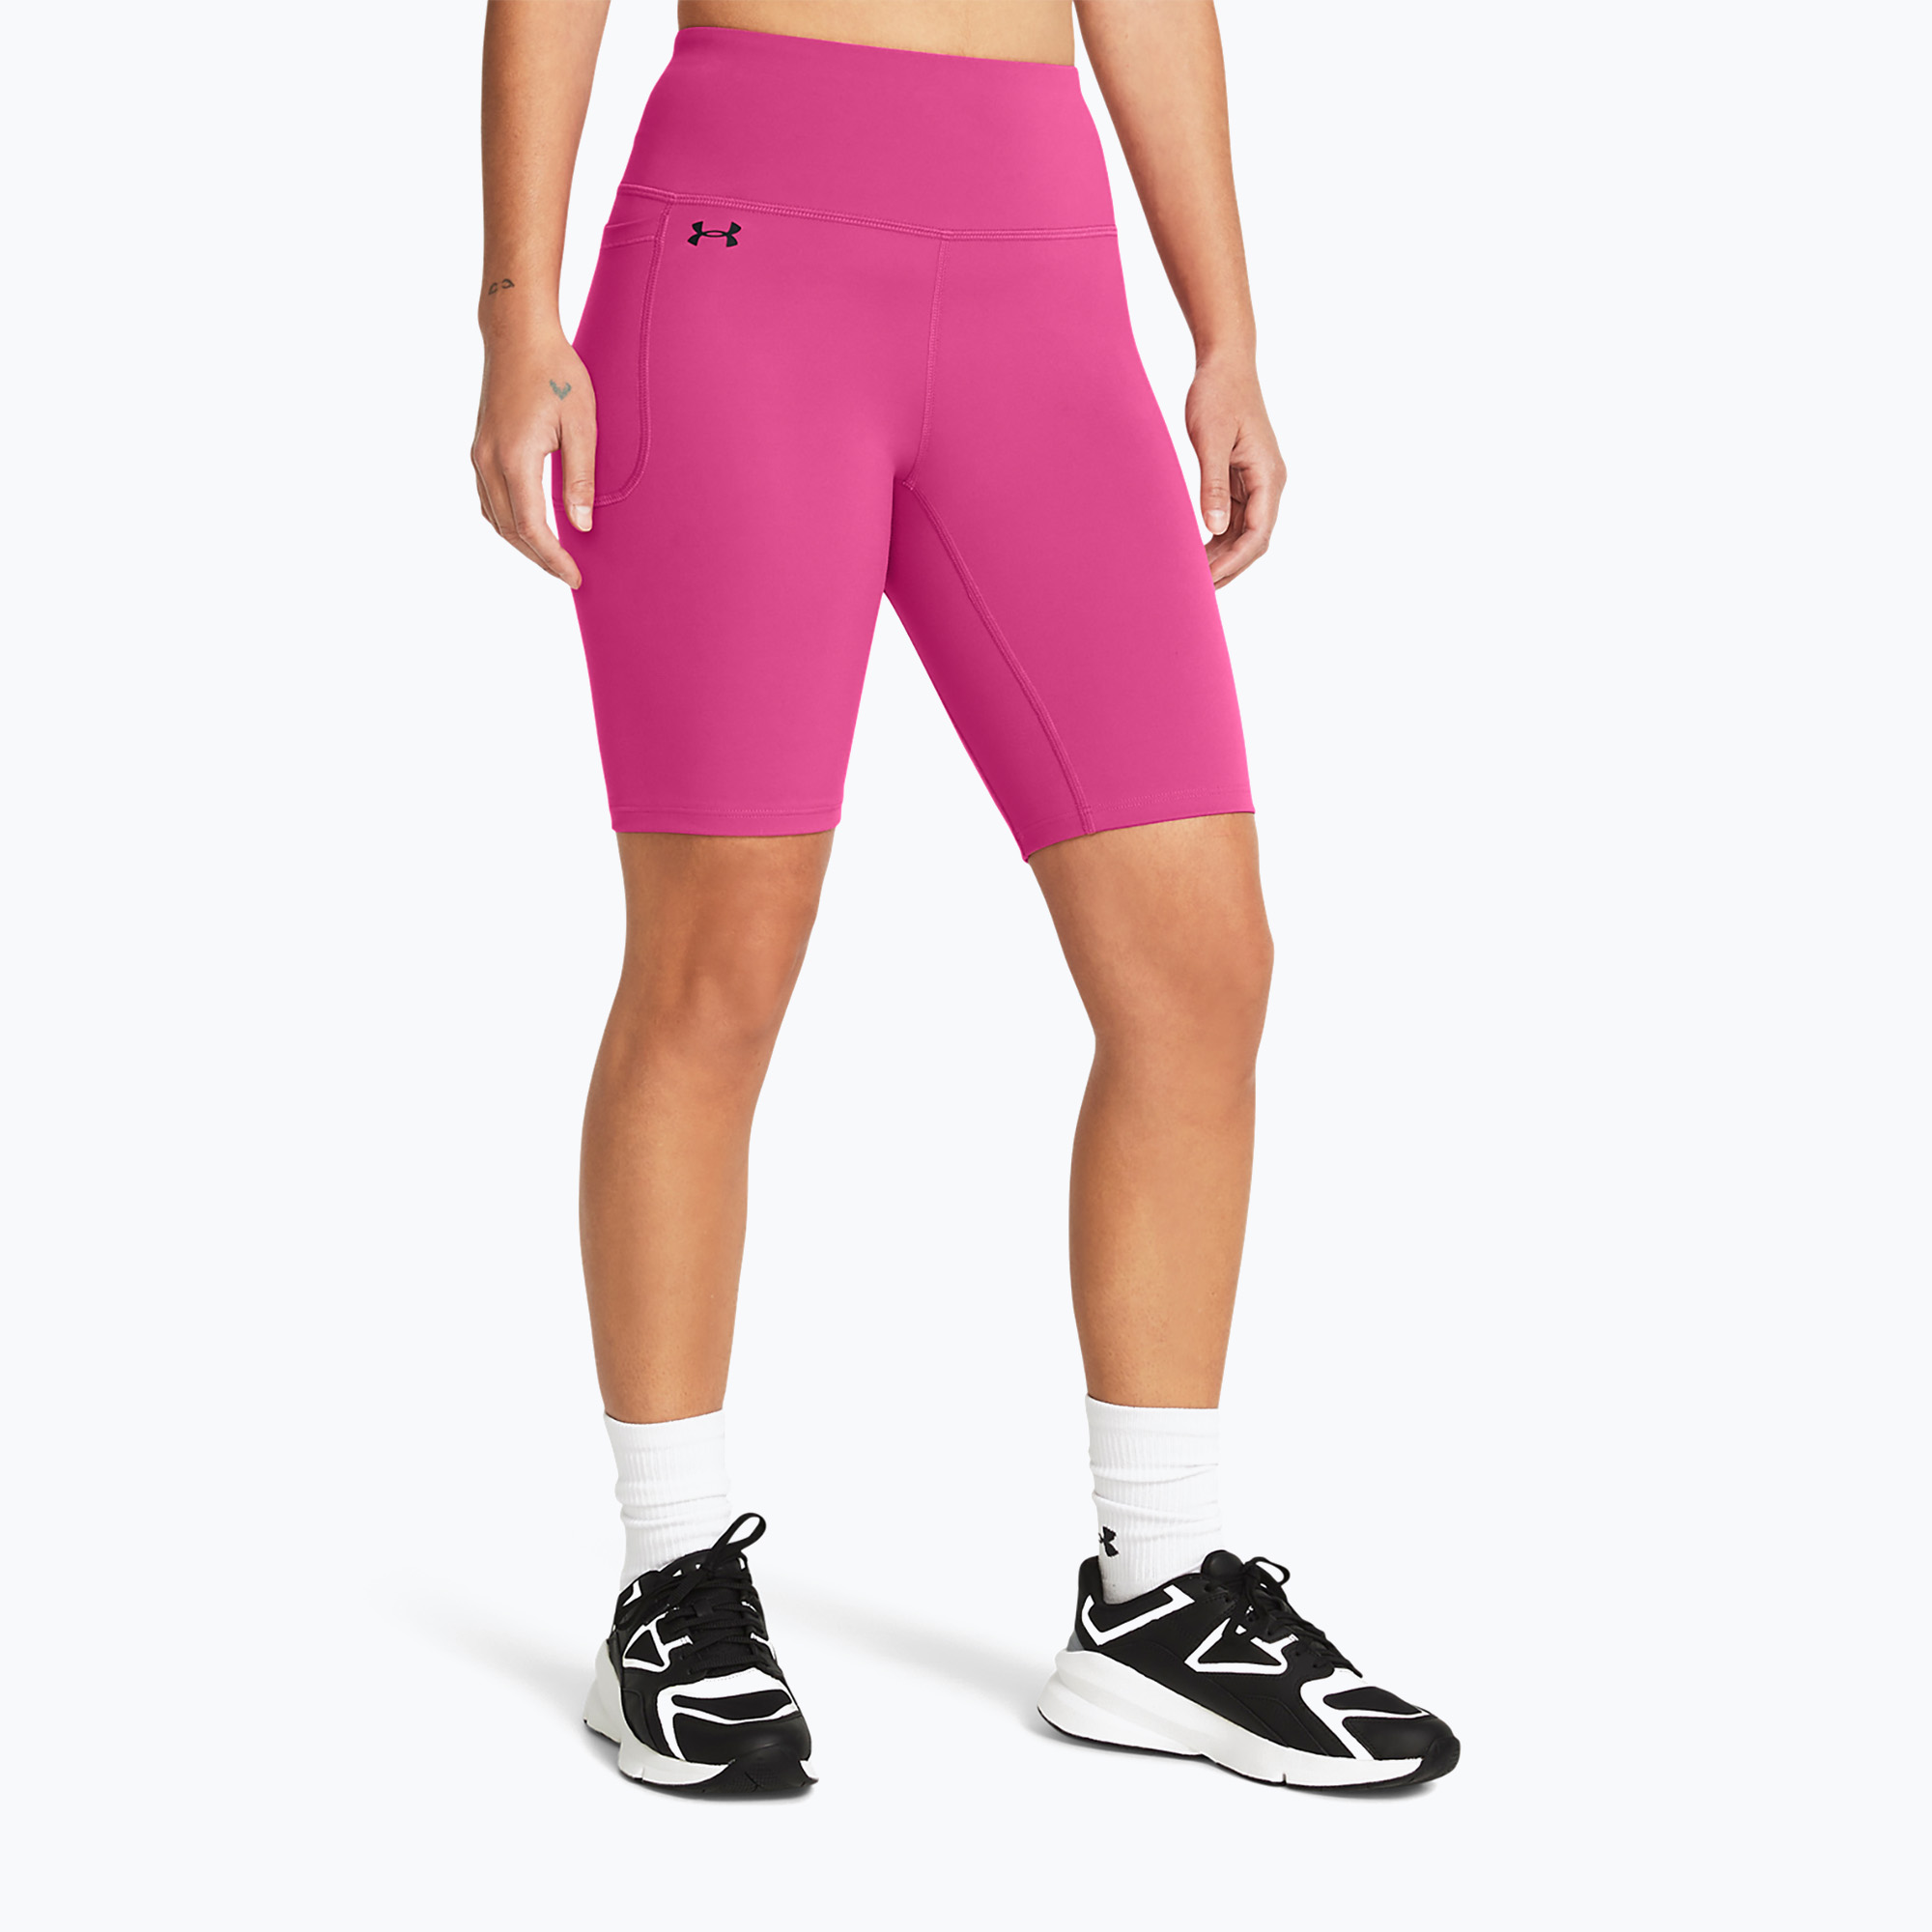 Къси панталони за тренировка за жени Under Armour Motion Bike Short astro pink/black